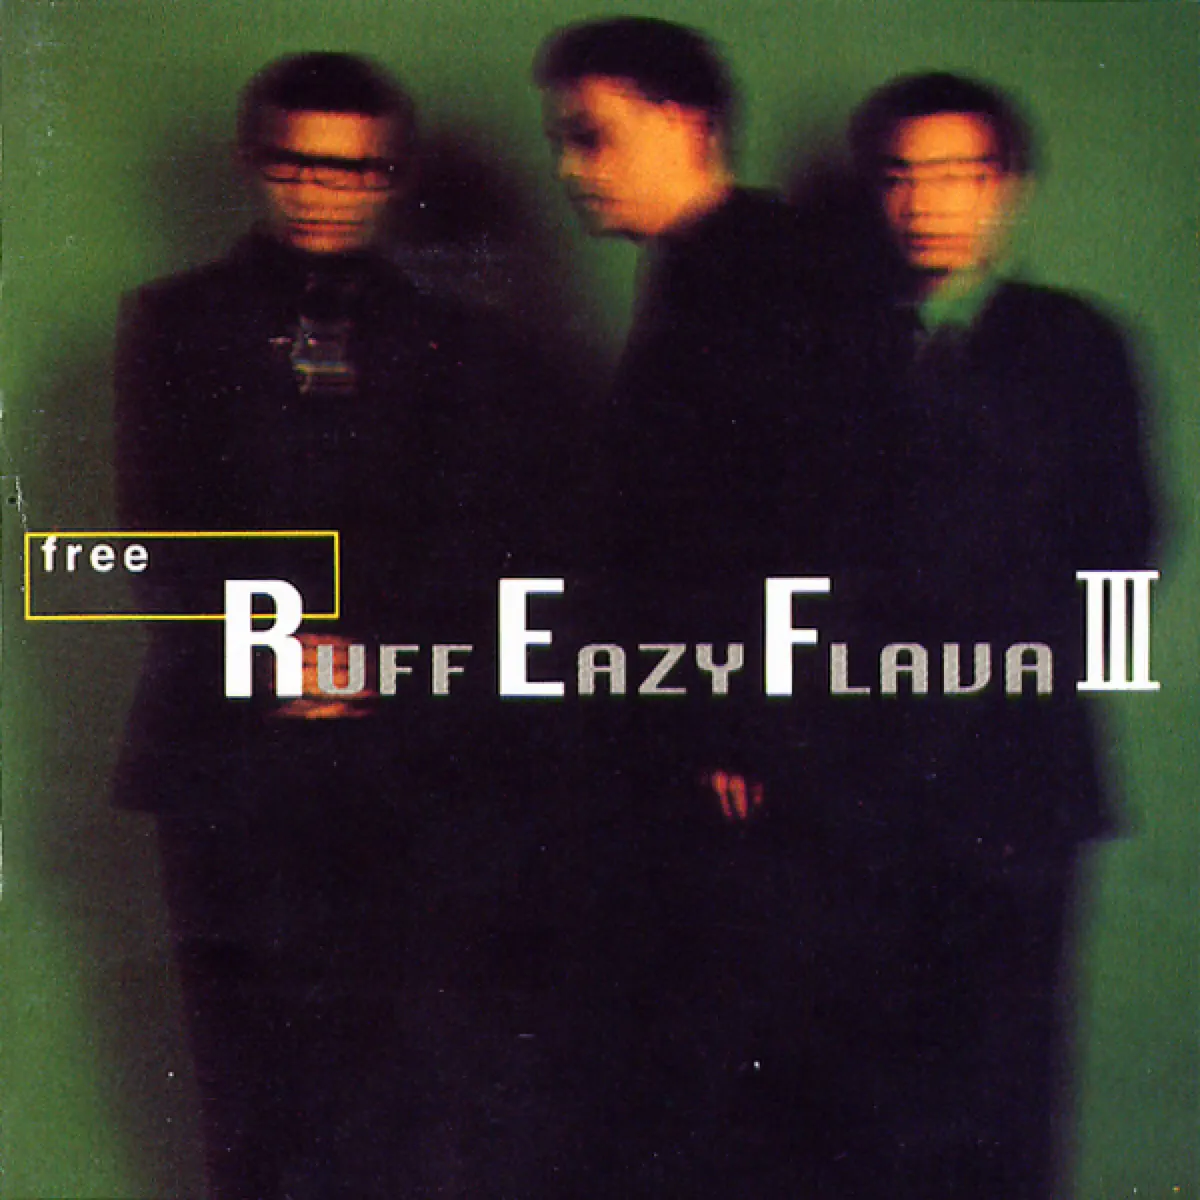 R.ef - Free Ruff Eazy Flava III (1997) [iTunes Plus AAC M4A]-新房子